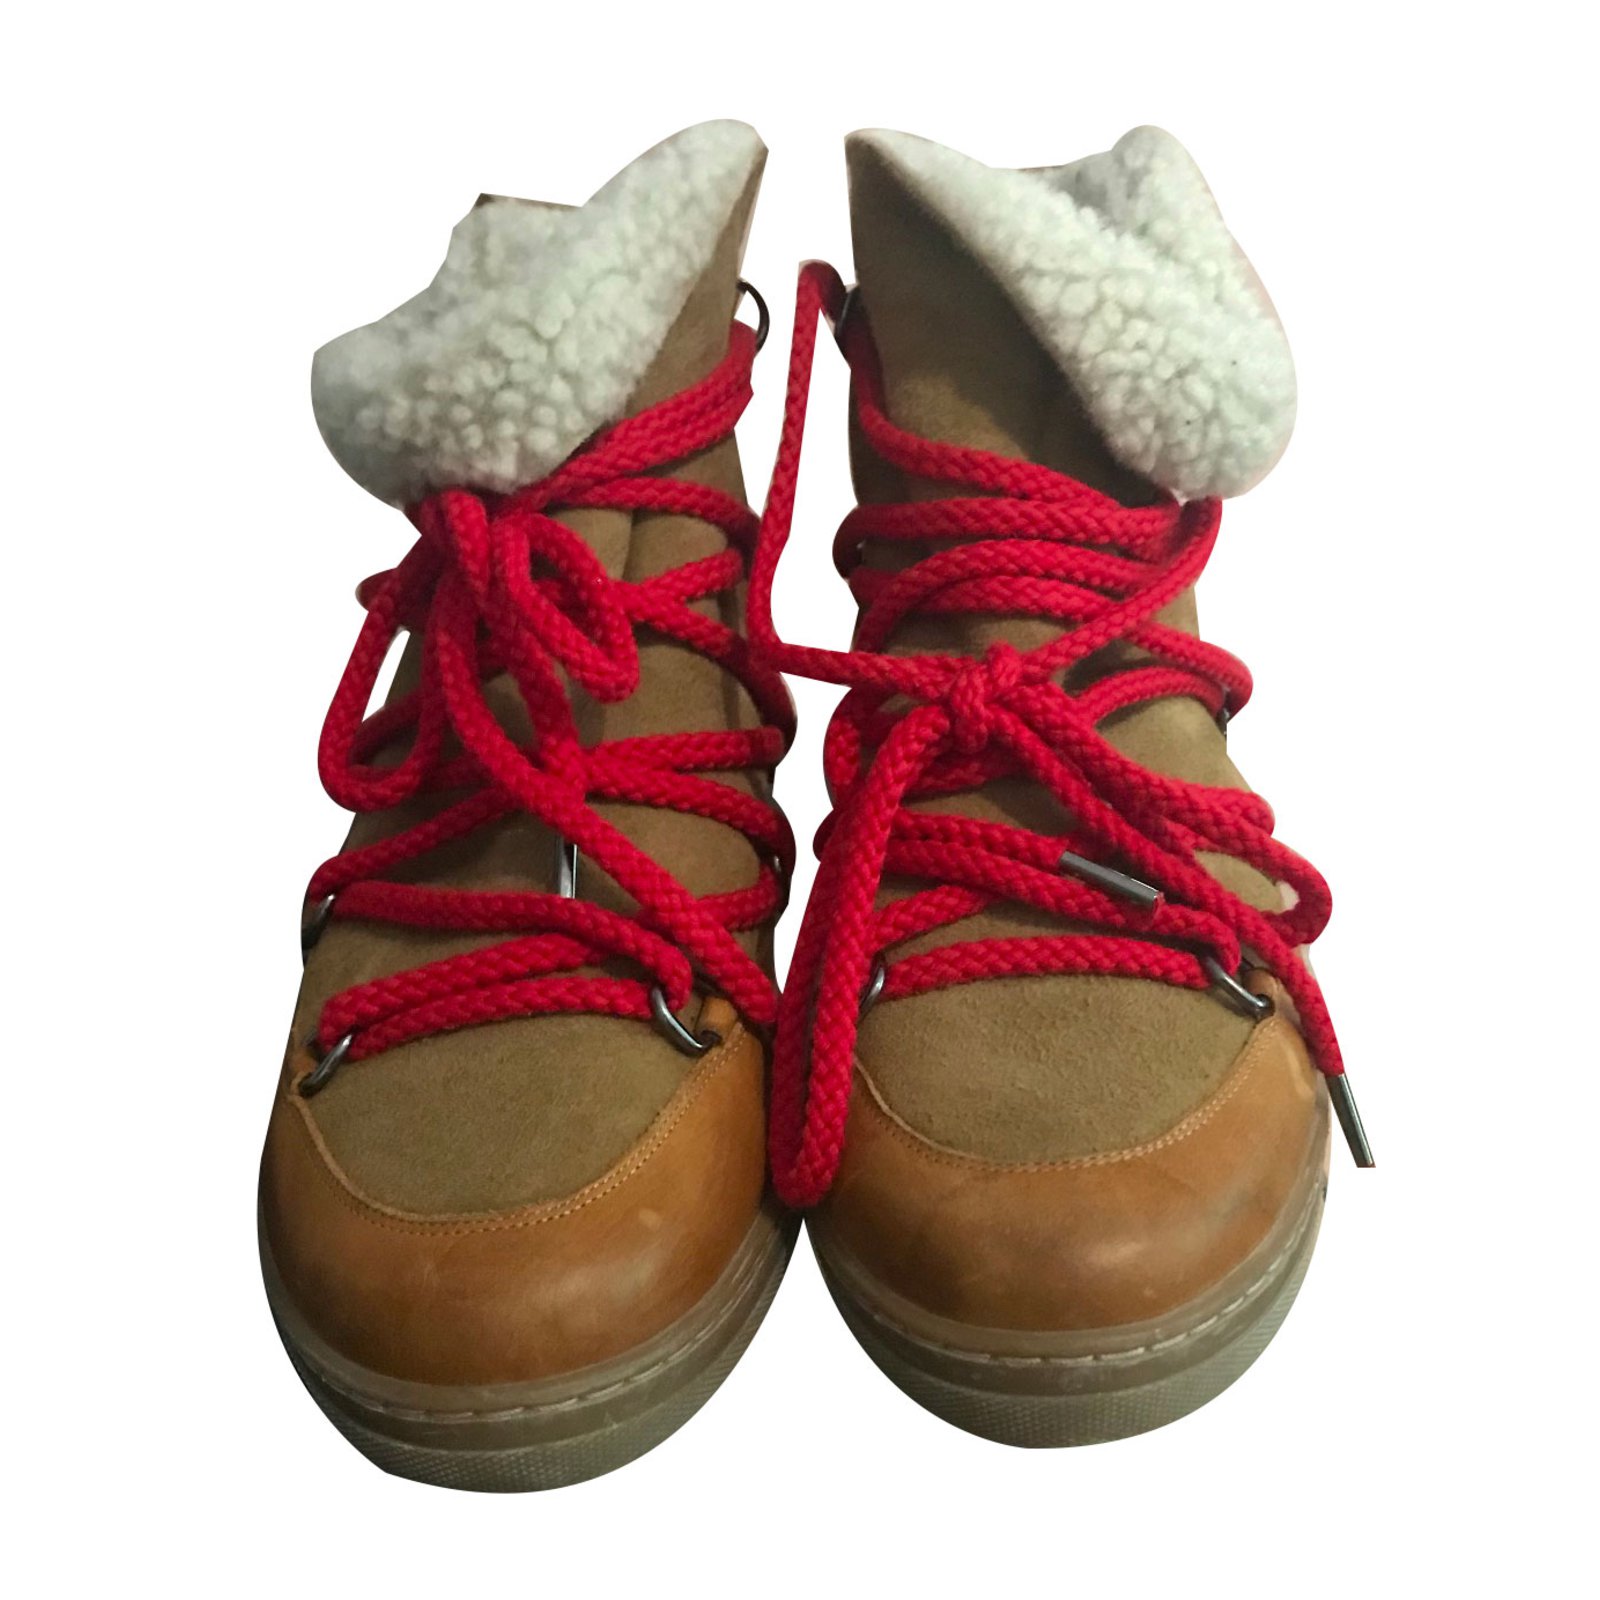 Isabel Marant Boots Boots Leather Beige Light Brown Caramel Ref Joli Closet